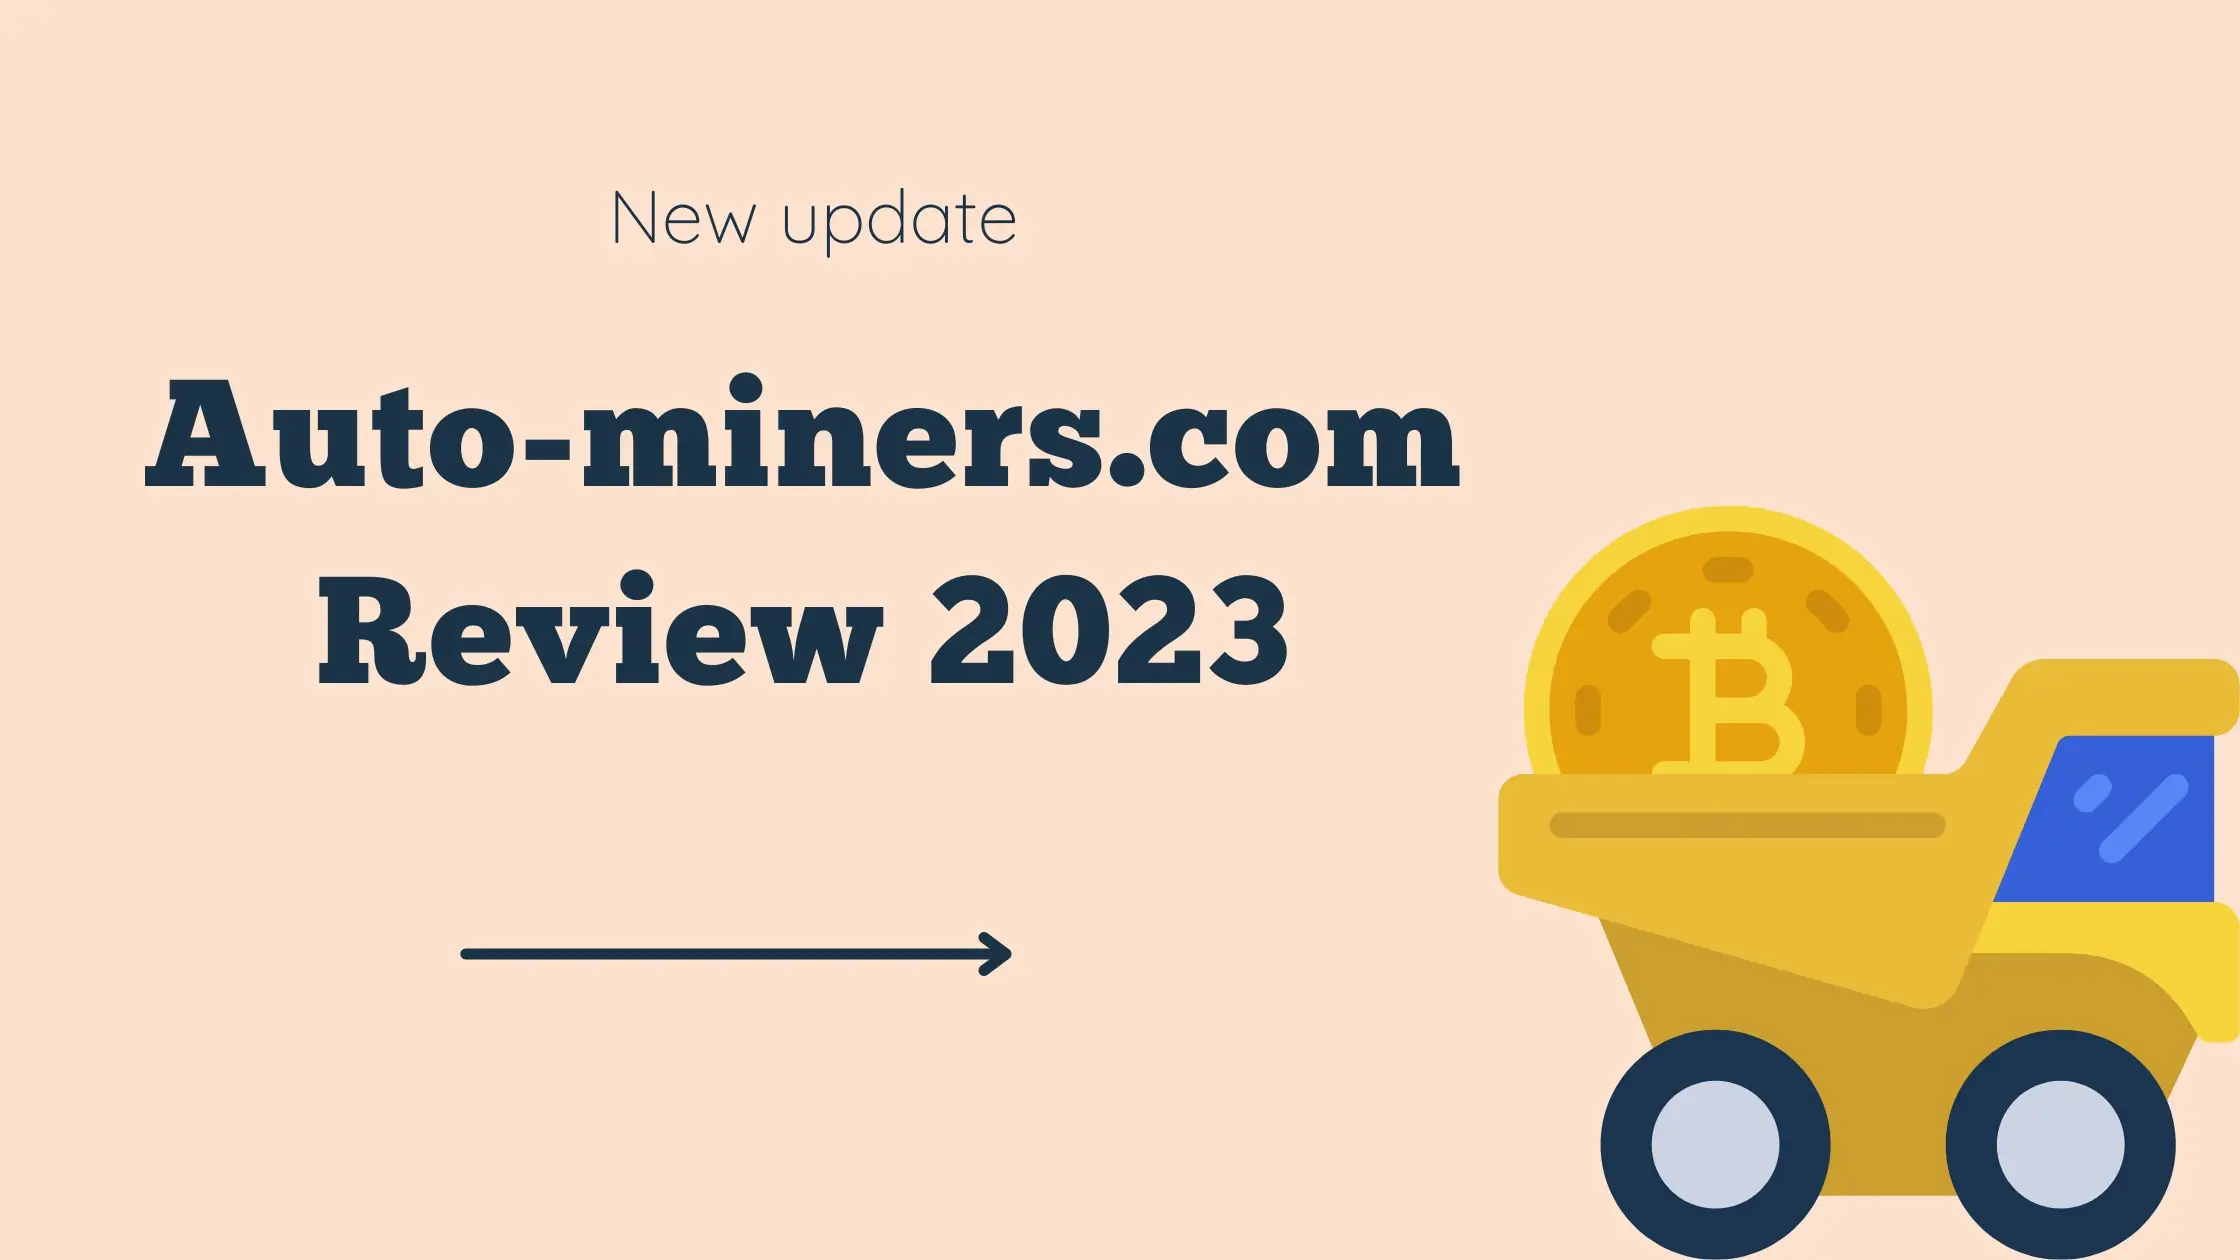 Auto-miners.com Review 2023